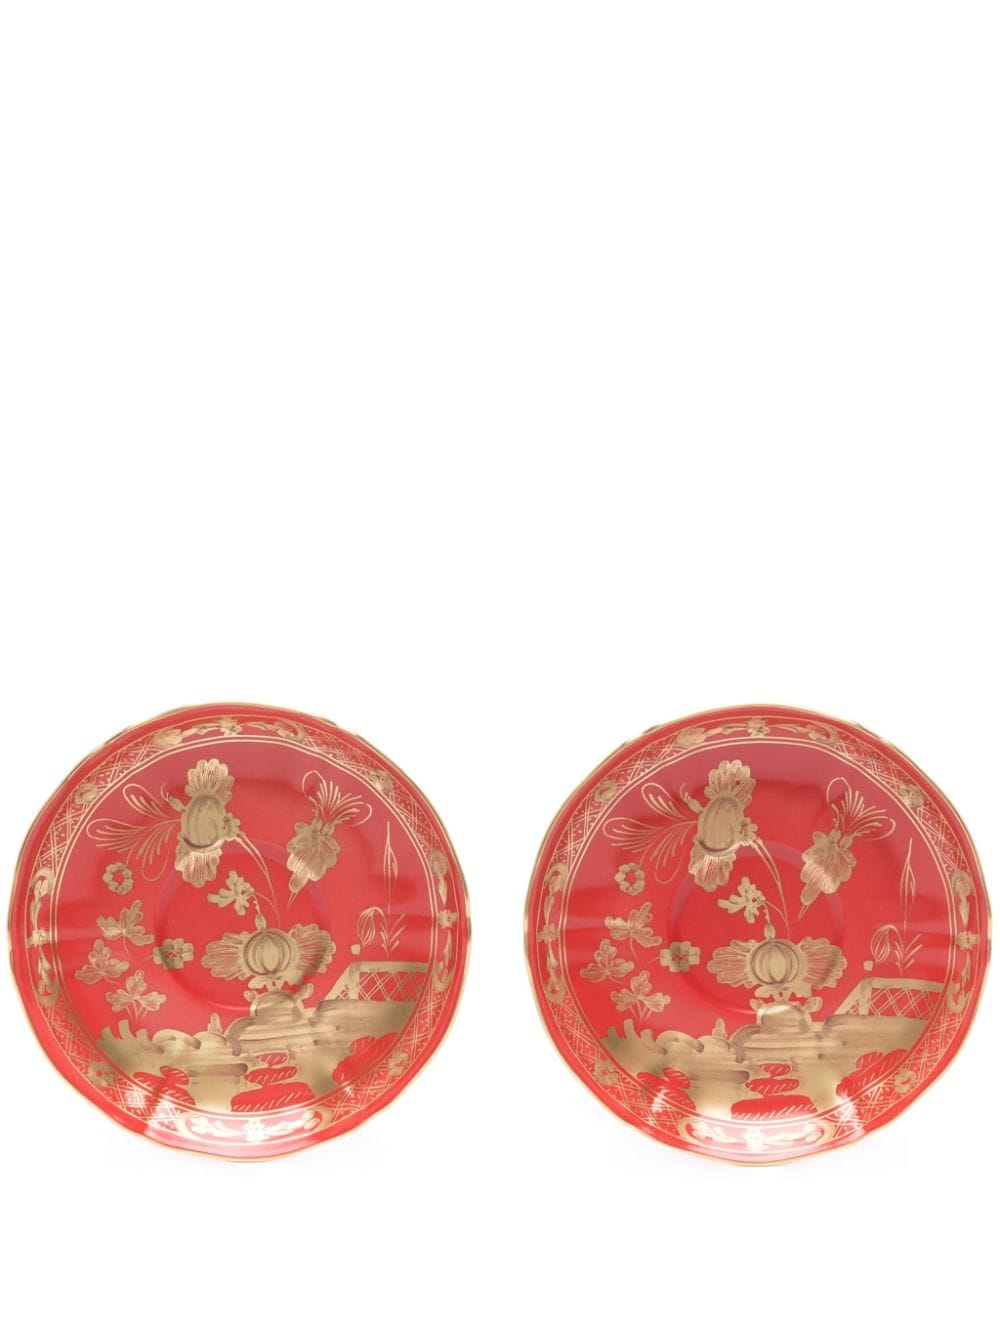 GINORI 1735 Oriente Italiano Rubrum porcelain plate (set of two) - Red von GINORI 1735